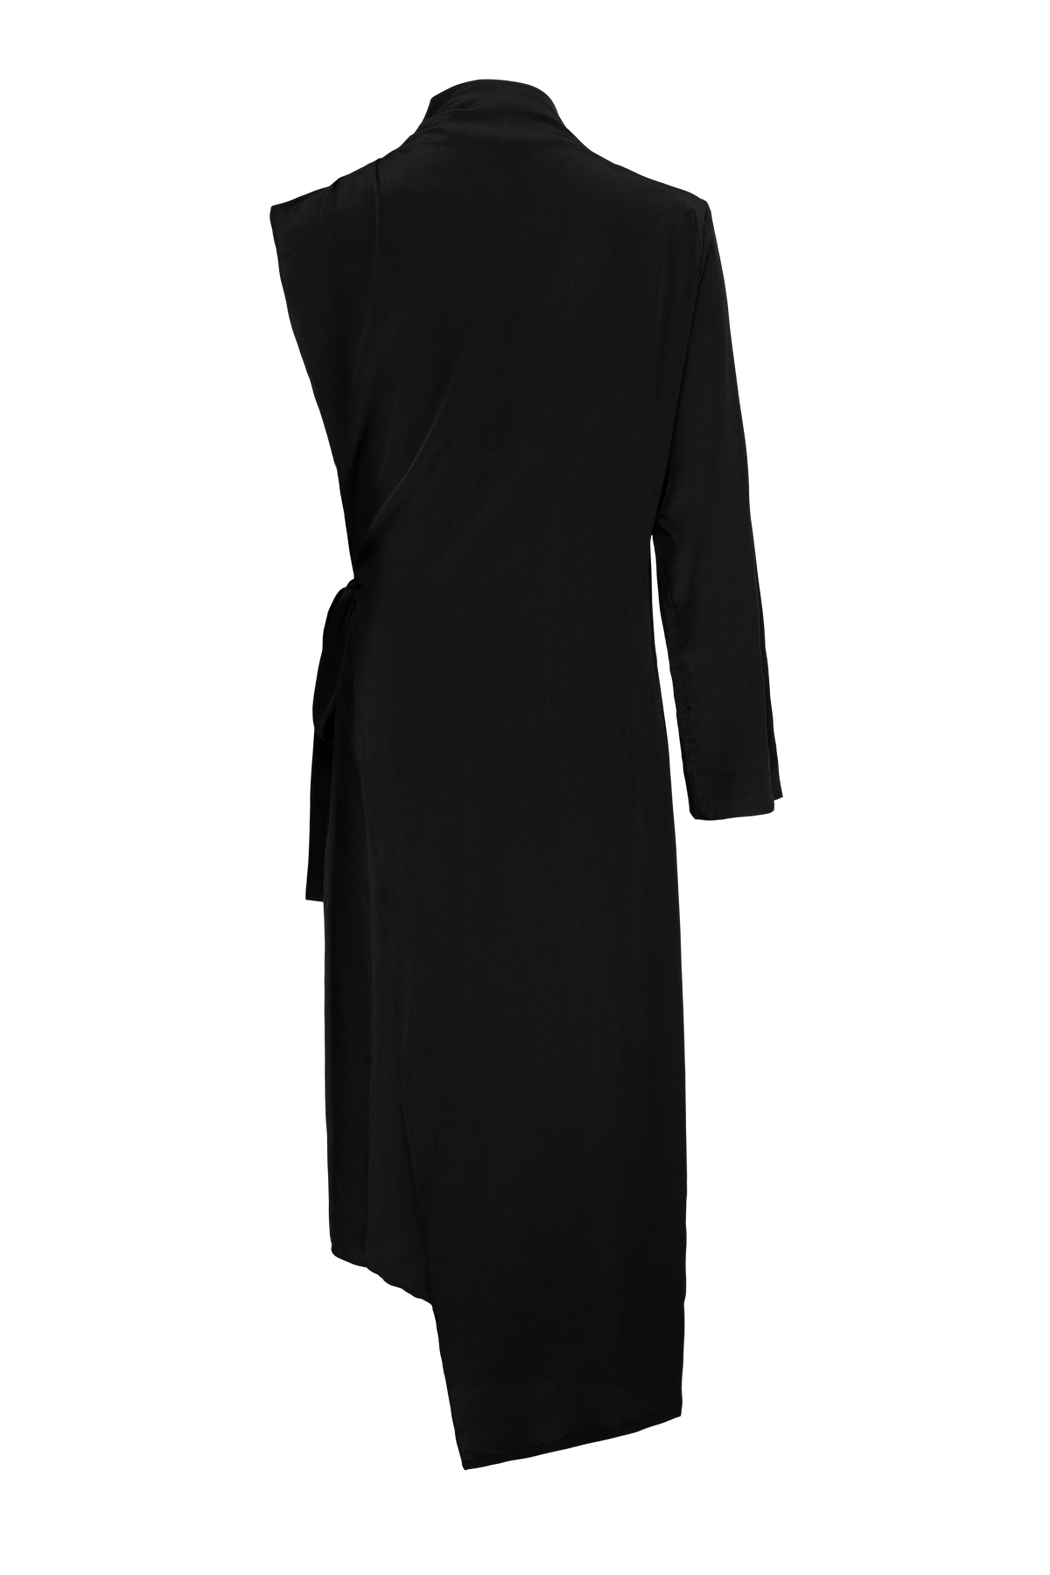 Envelope1976 Nomad dress - CDC silk Dress Black